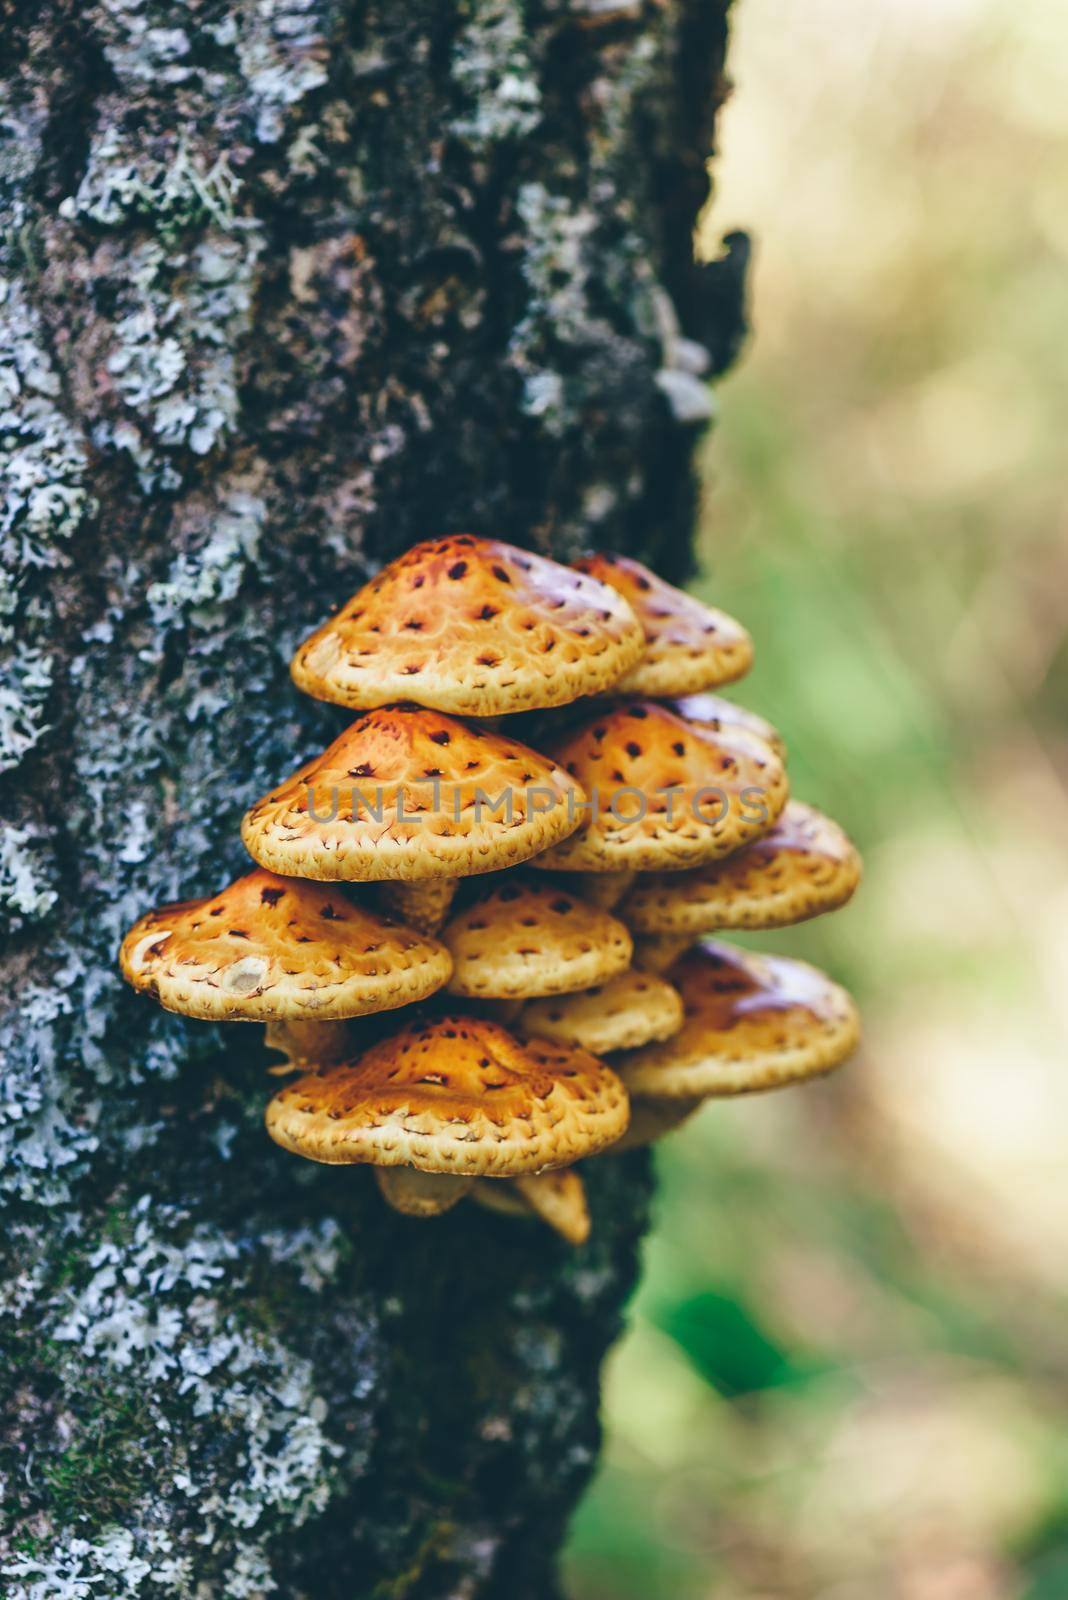 Pholiota aurivella mushrooms on a birch by Seva_blsv